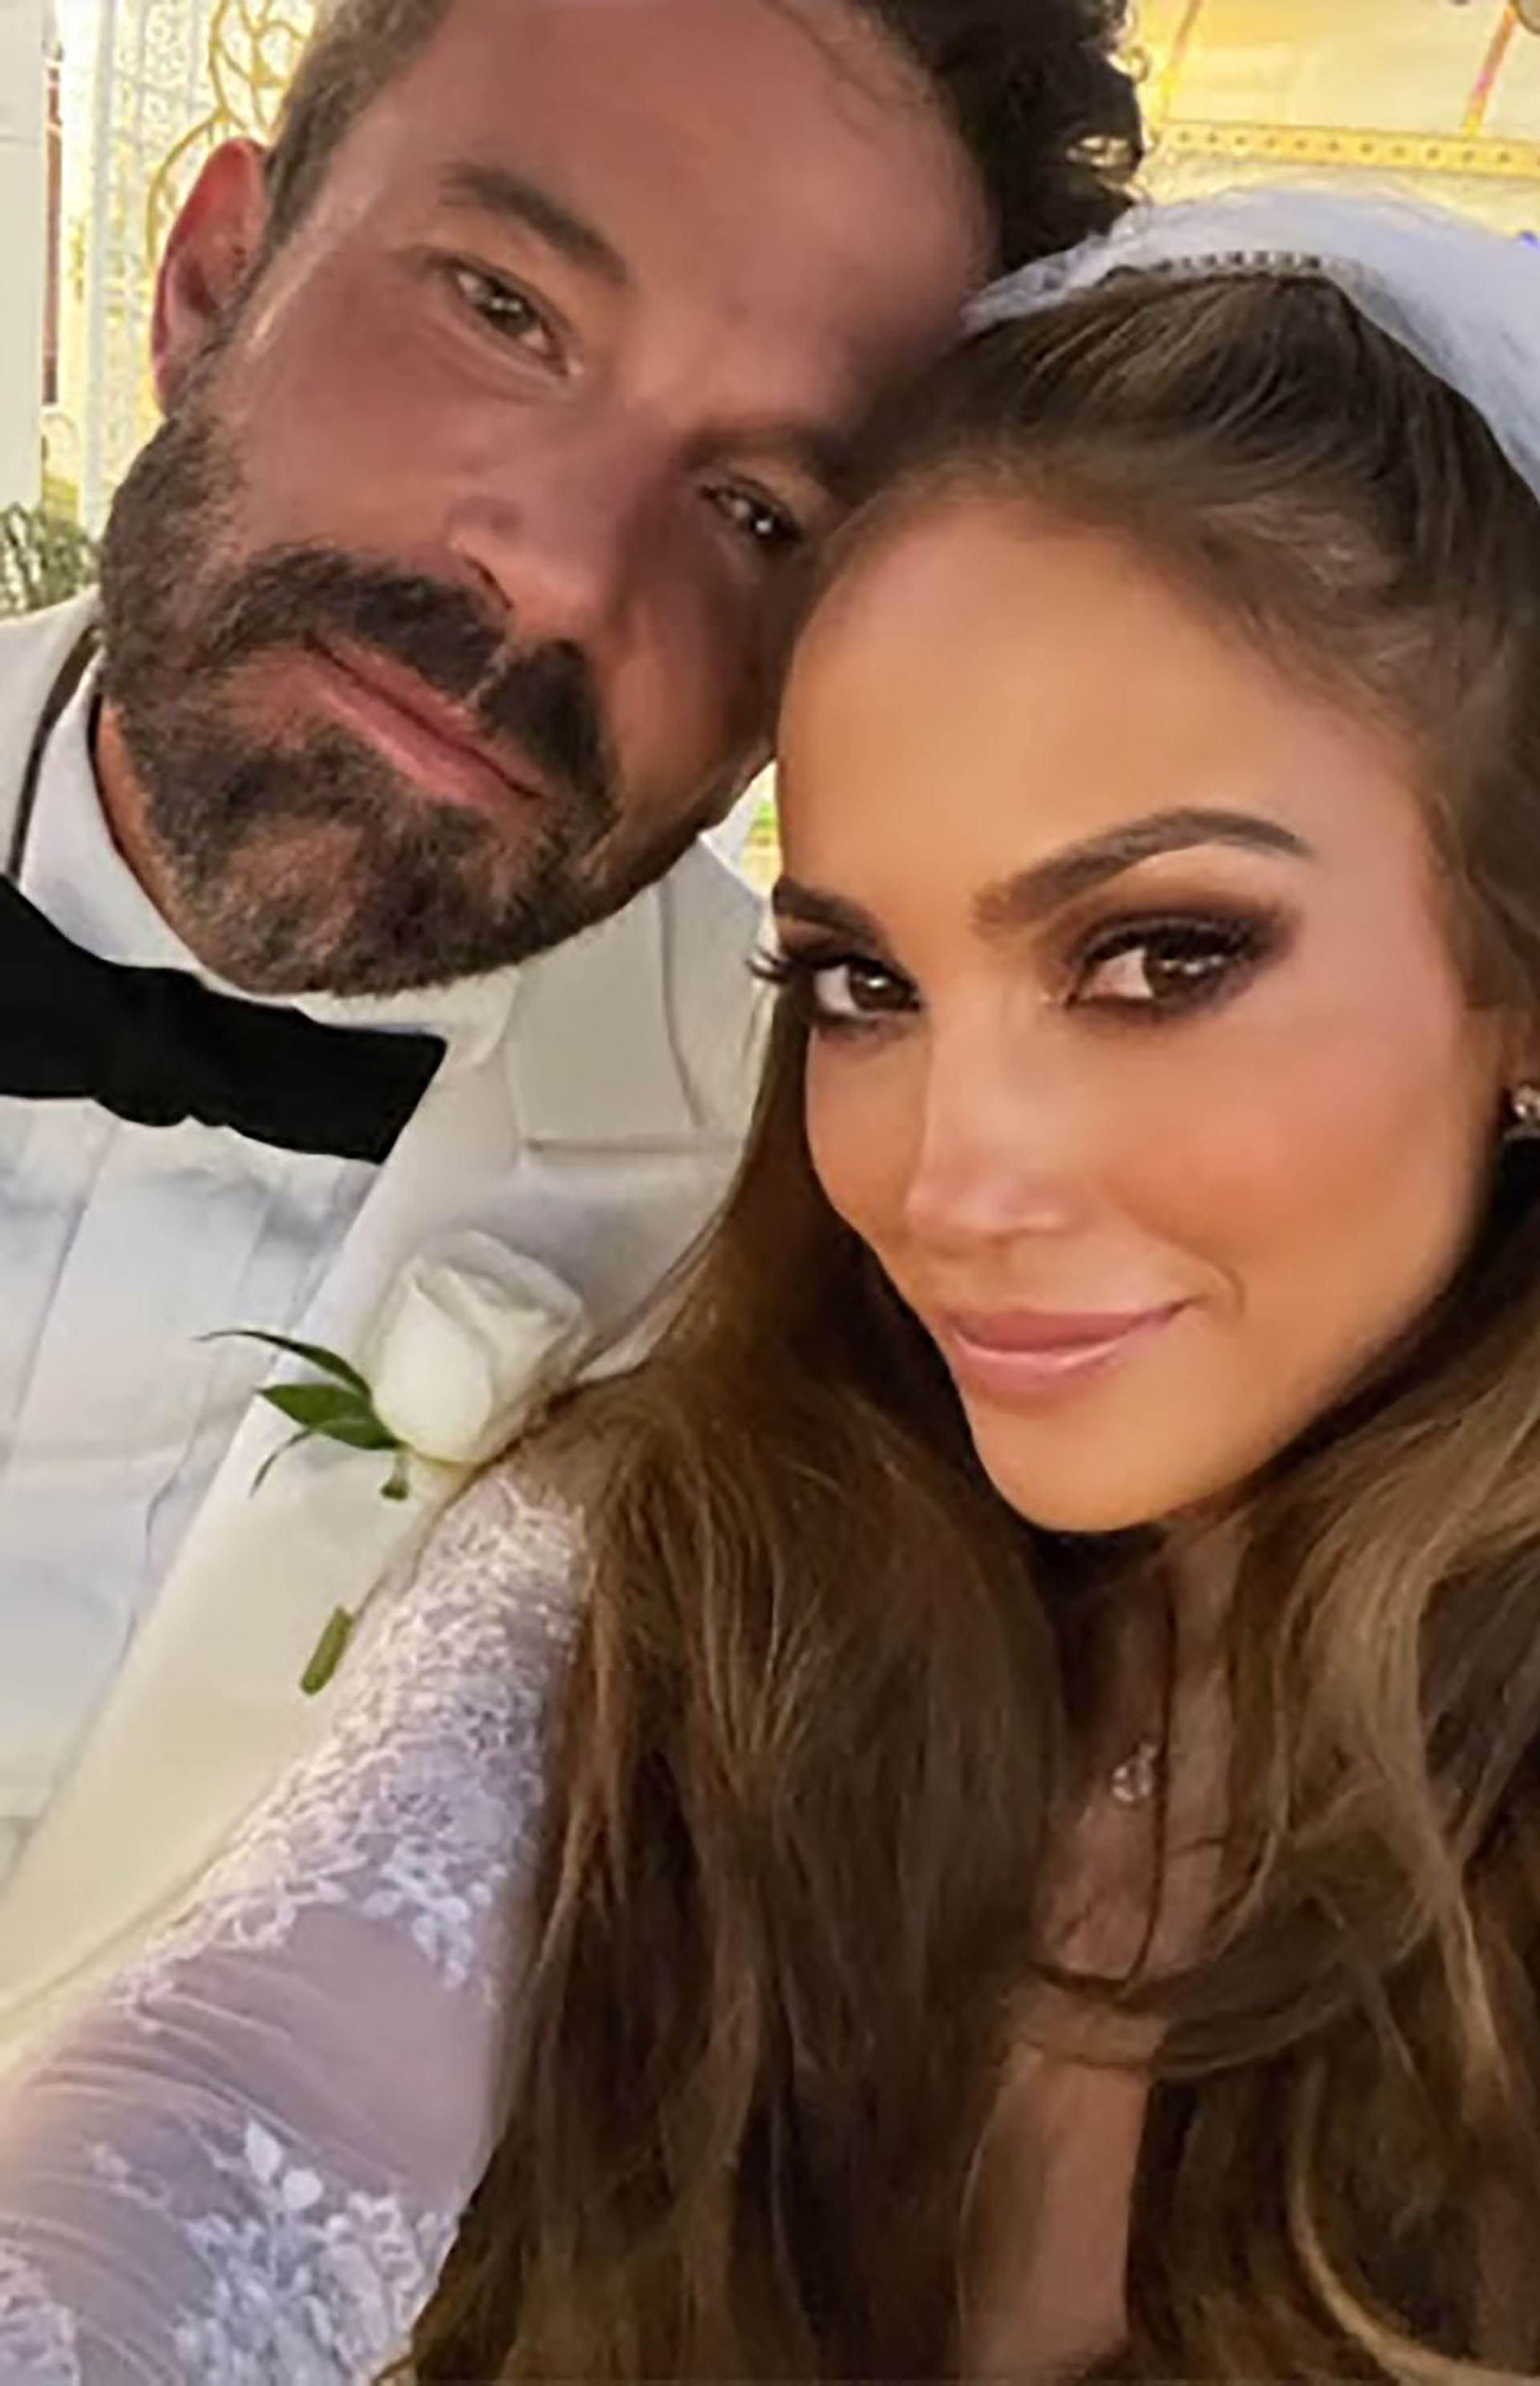 Jennifer Lopez y Ben Affleck se casaron en Las Vegas